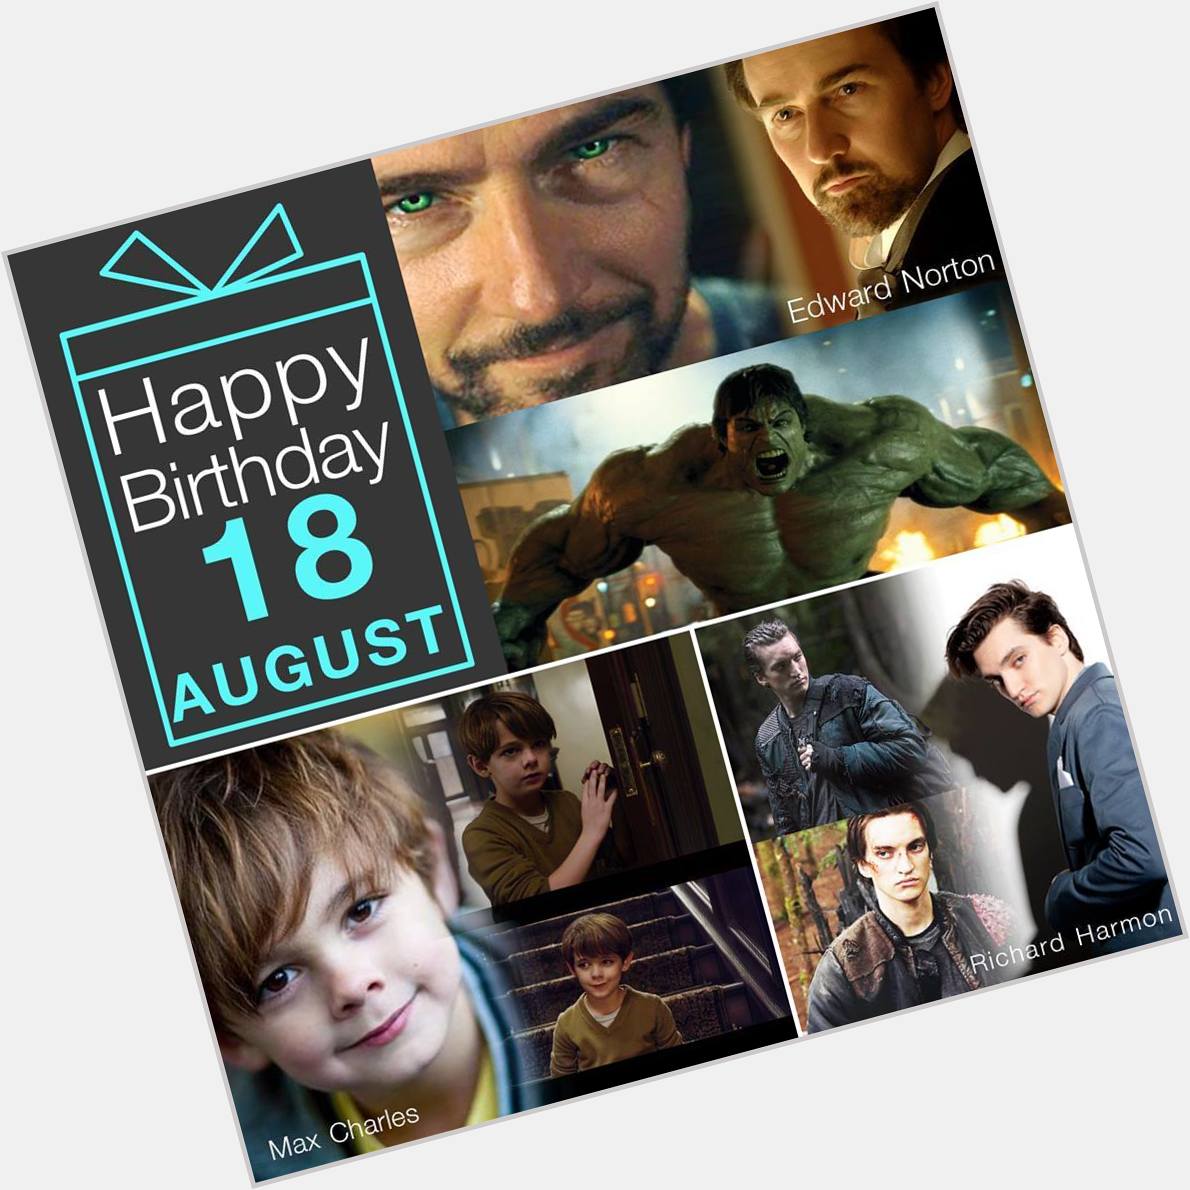 18 August HAPPY BIRTHDAY
- Edward Norton
- Max Charles
- Richard Harmon 